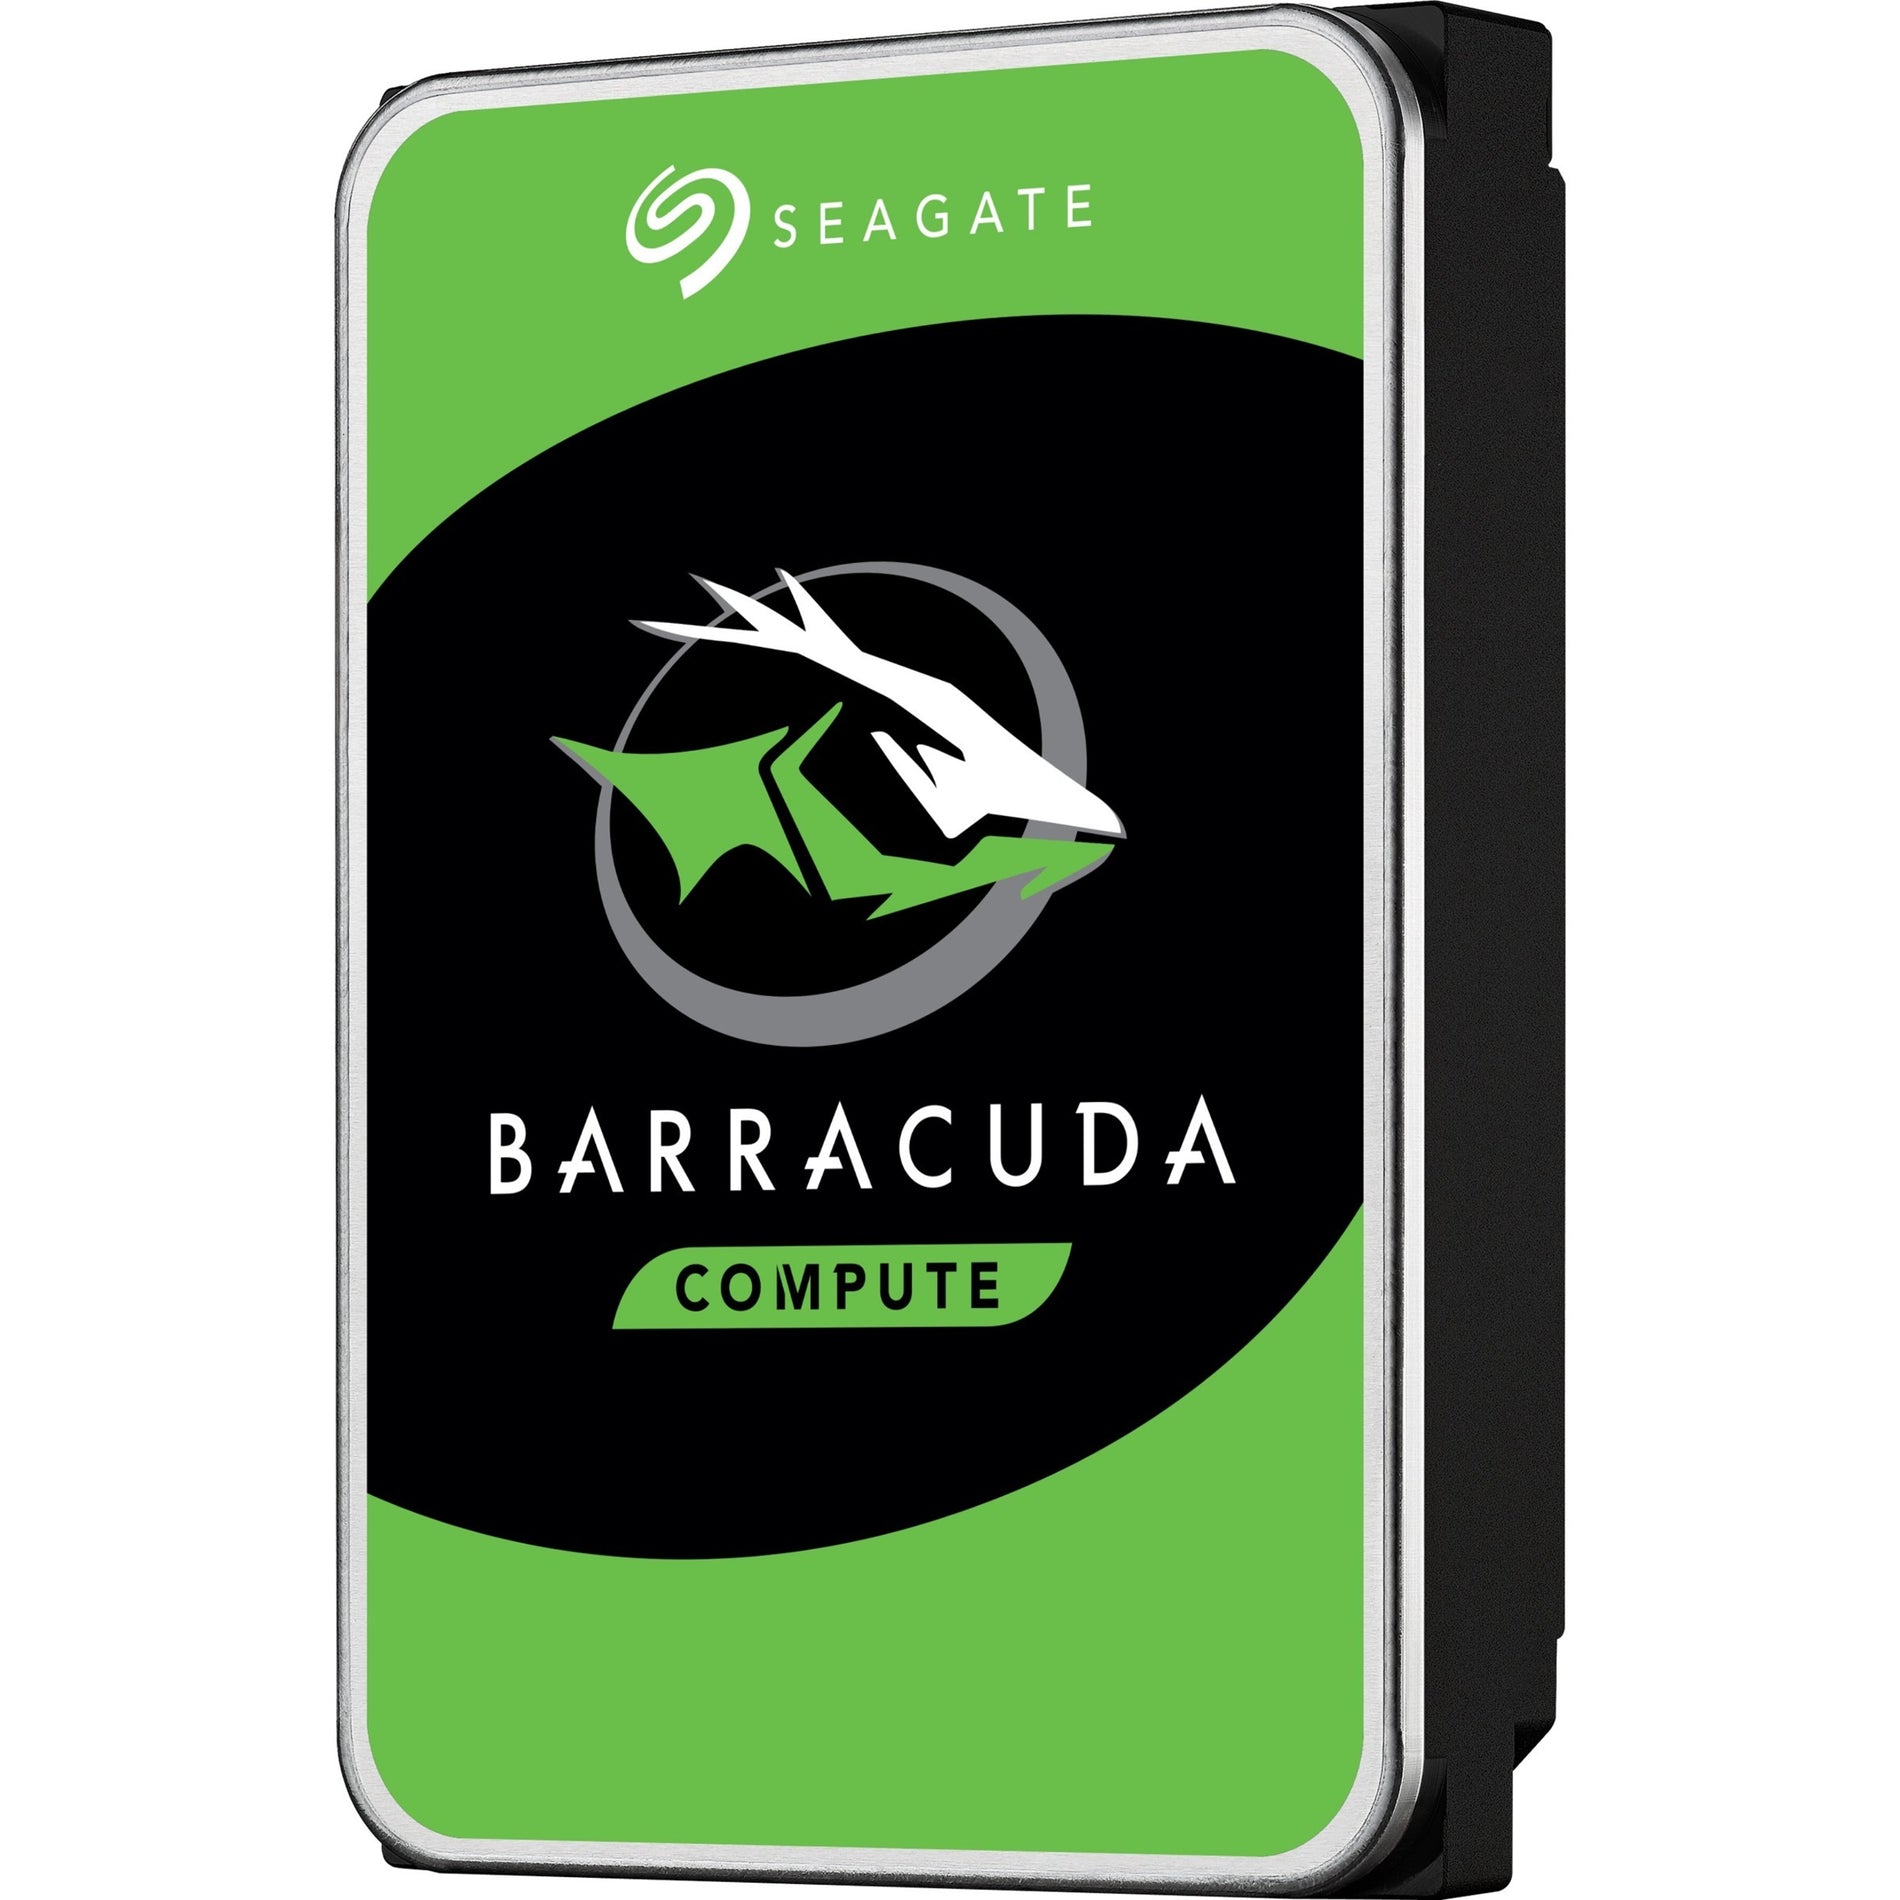 Seagate ST4000DM004 BarraCuda 4TB Internal Hard Drive, 3.5" SATA 6Gb/s, 64MB Cache